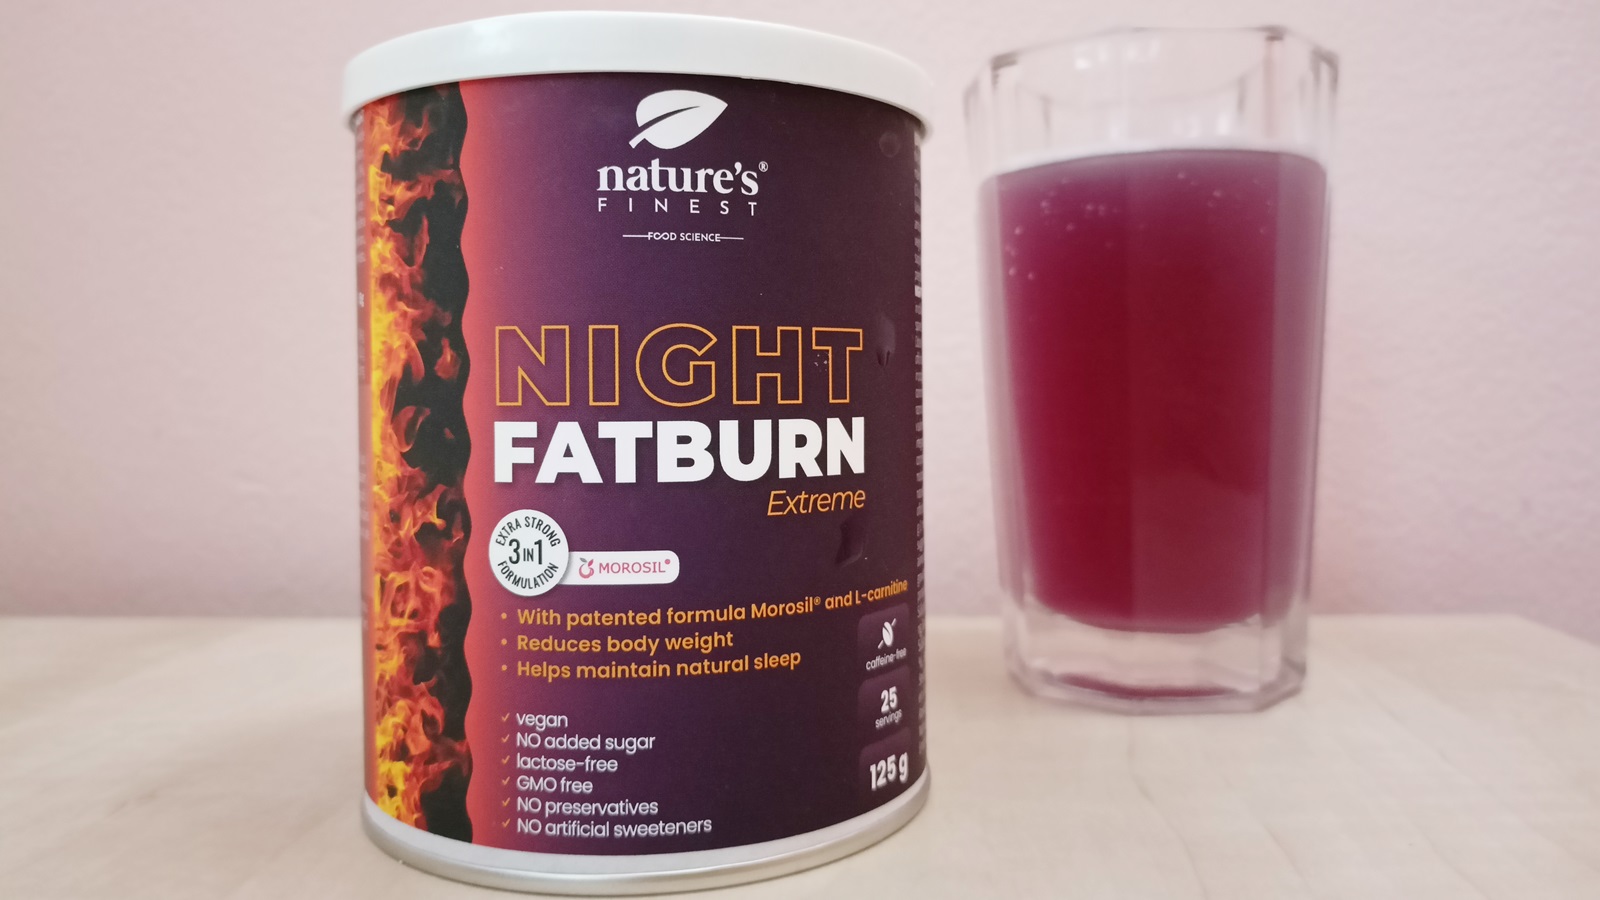 Revisión: Night FatBurn Extreme de Nature’s Finest